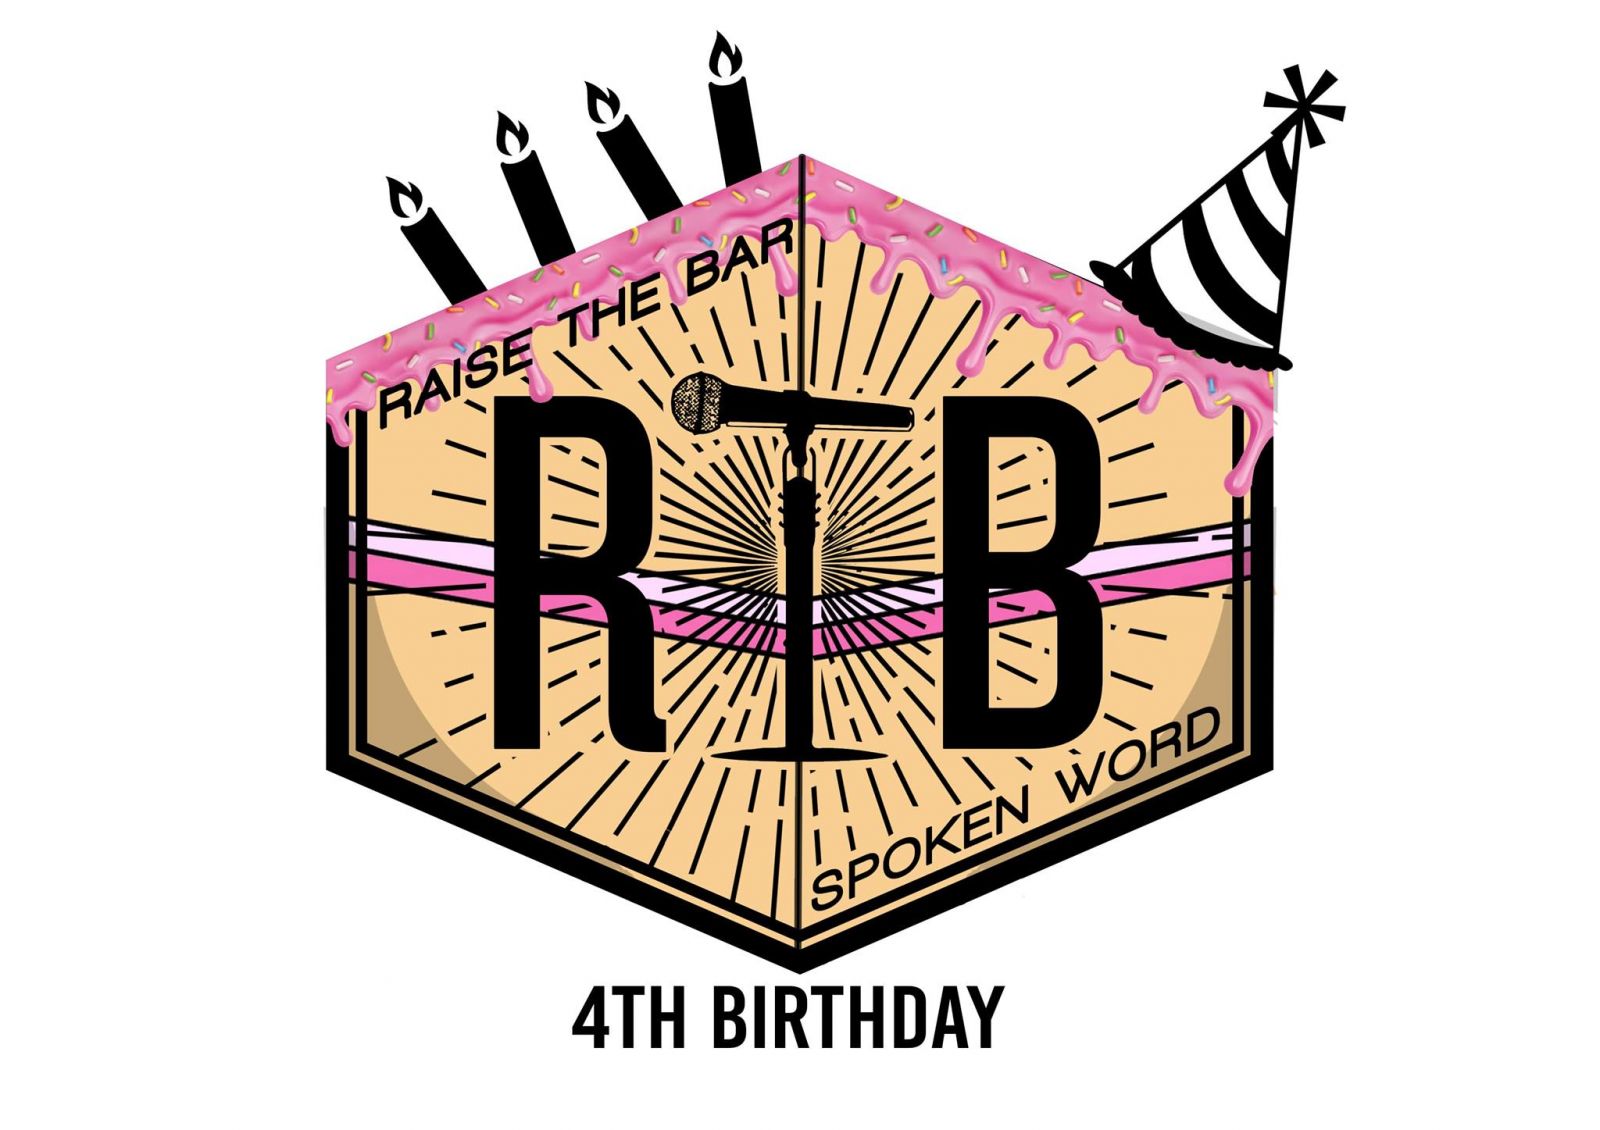 Raise the Bar celebrate their 4th birthday 